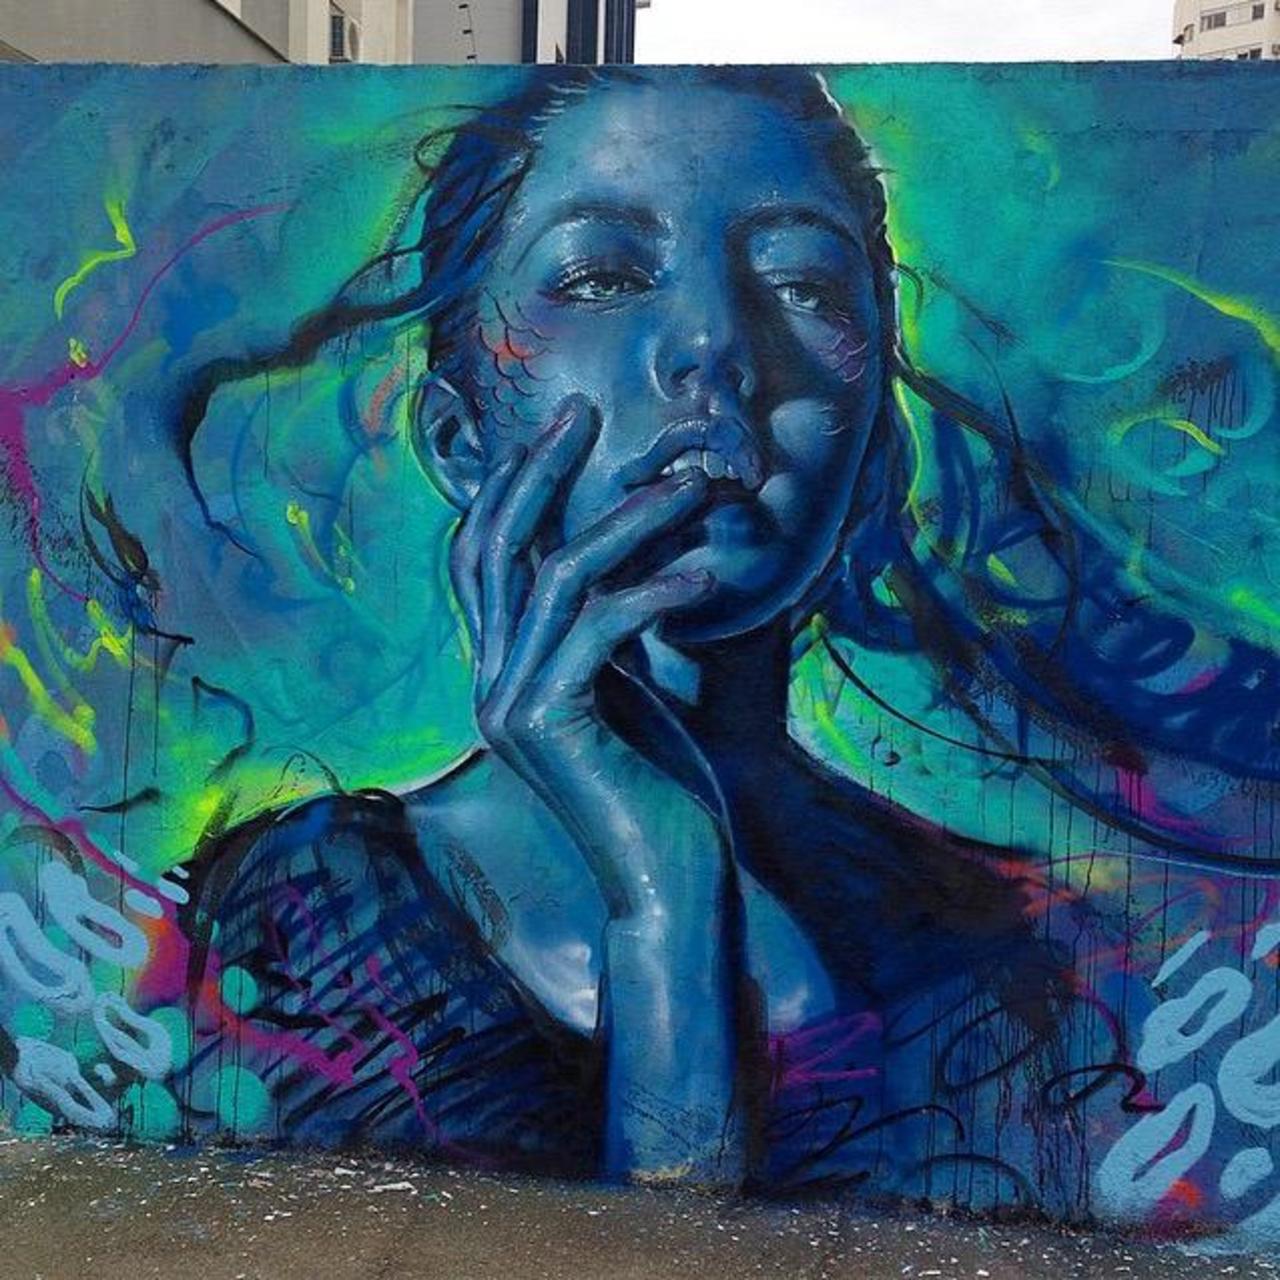 Thiago Valdi new Street Art piece titled 'Day Dreamer' #art #mural #graffiti #streetart http://t.co/3UodbQm48I …… http://twitter.com/charlesjackso14/status/652728476659773440